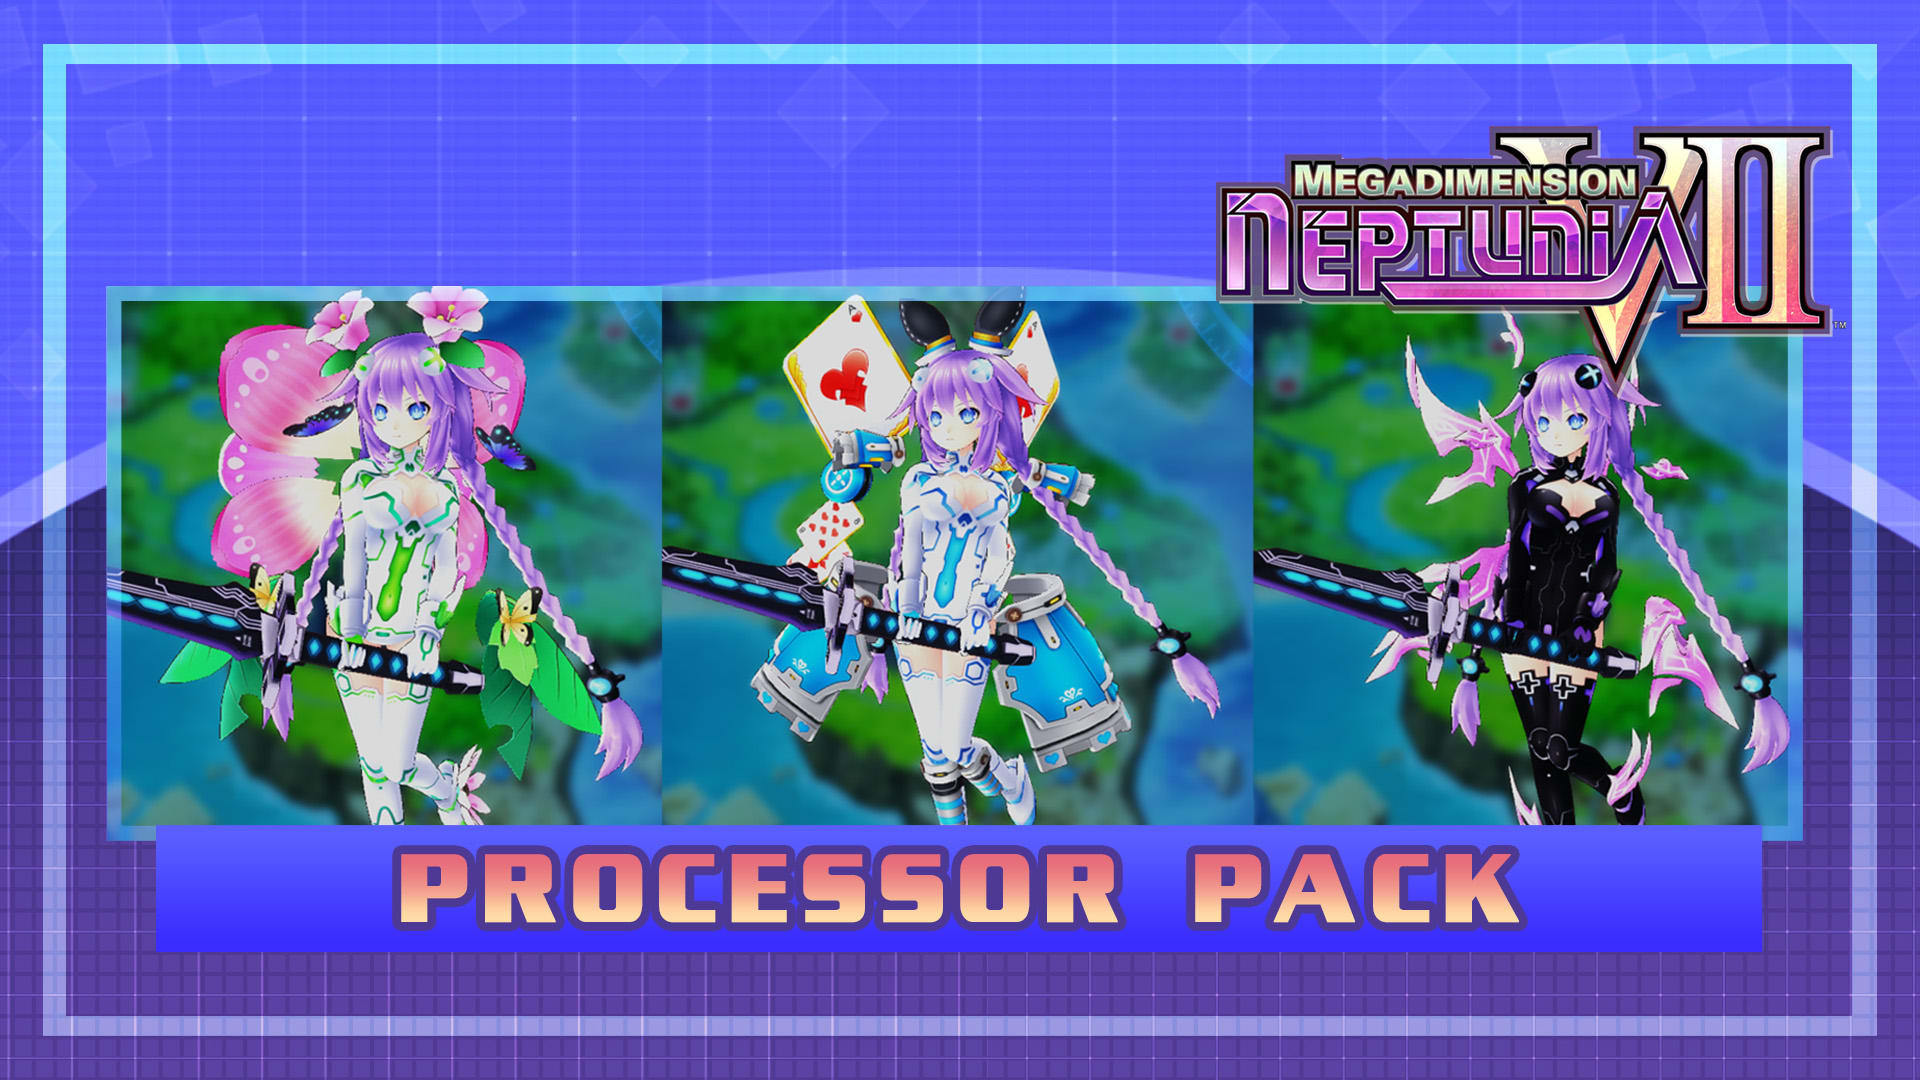 Processor Pack